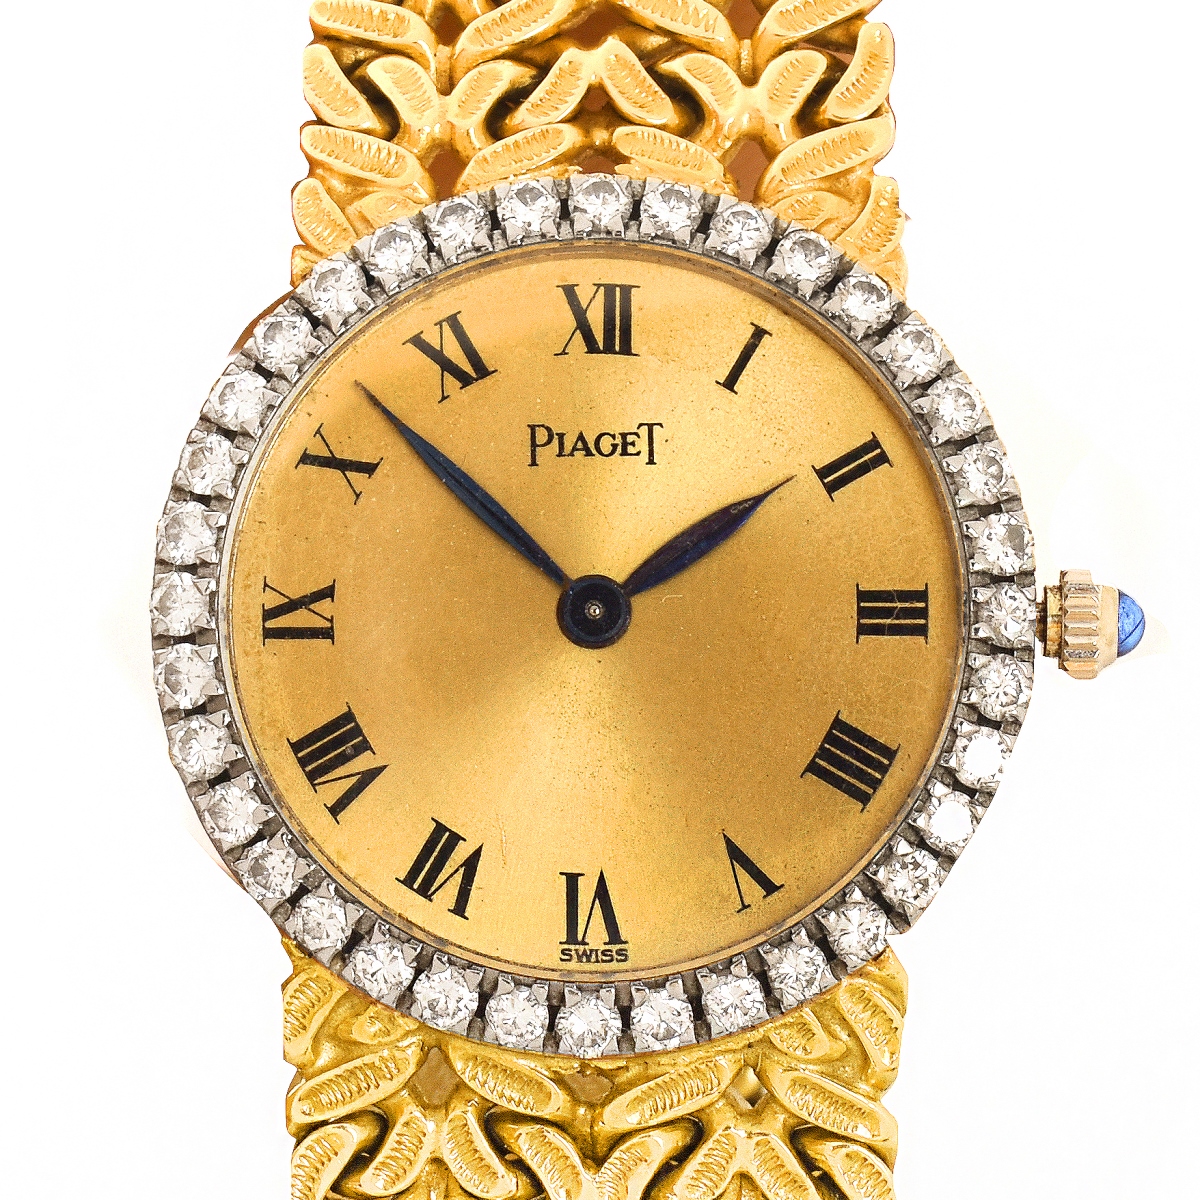 Vintage Piaget 18K Watch